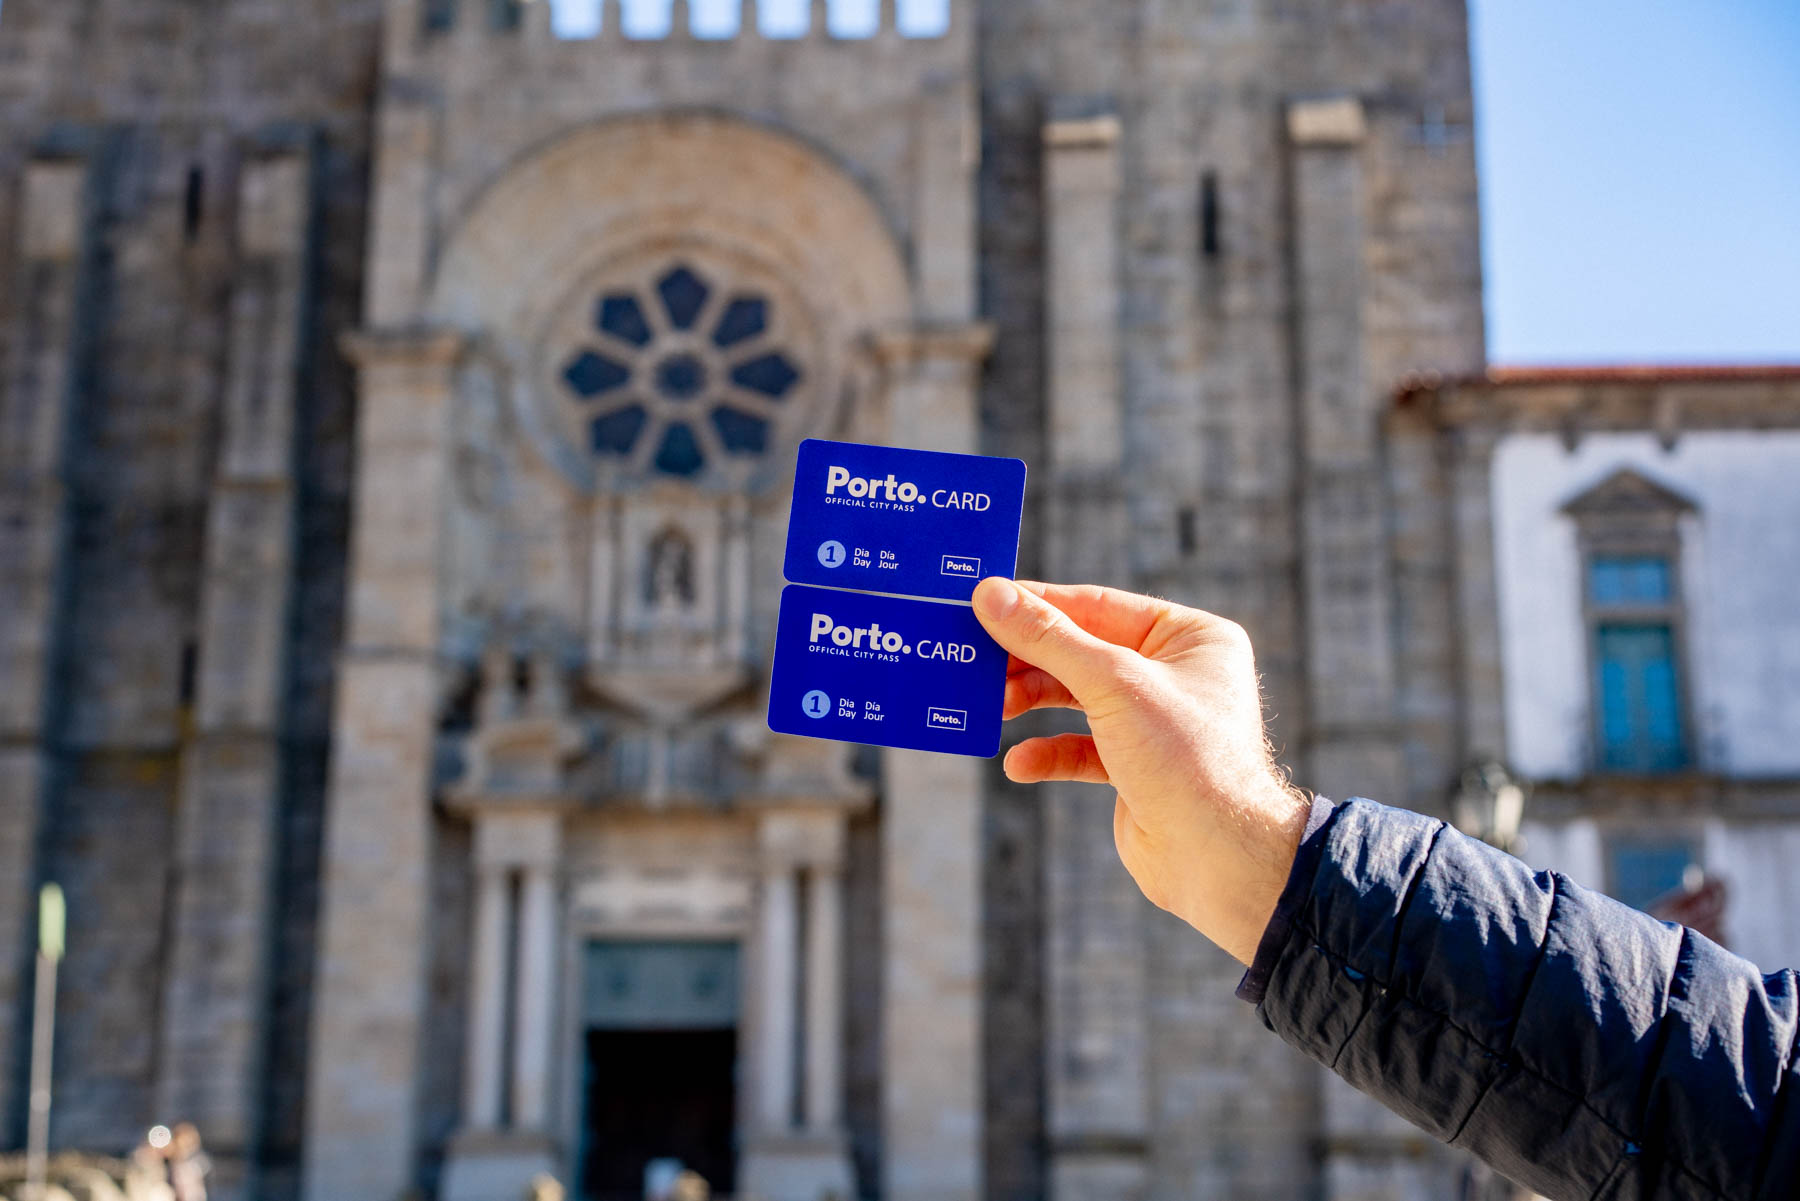 Porto Card
is the Porto Card worthwhile?